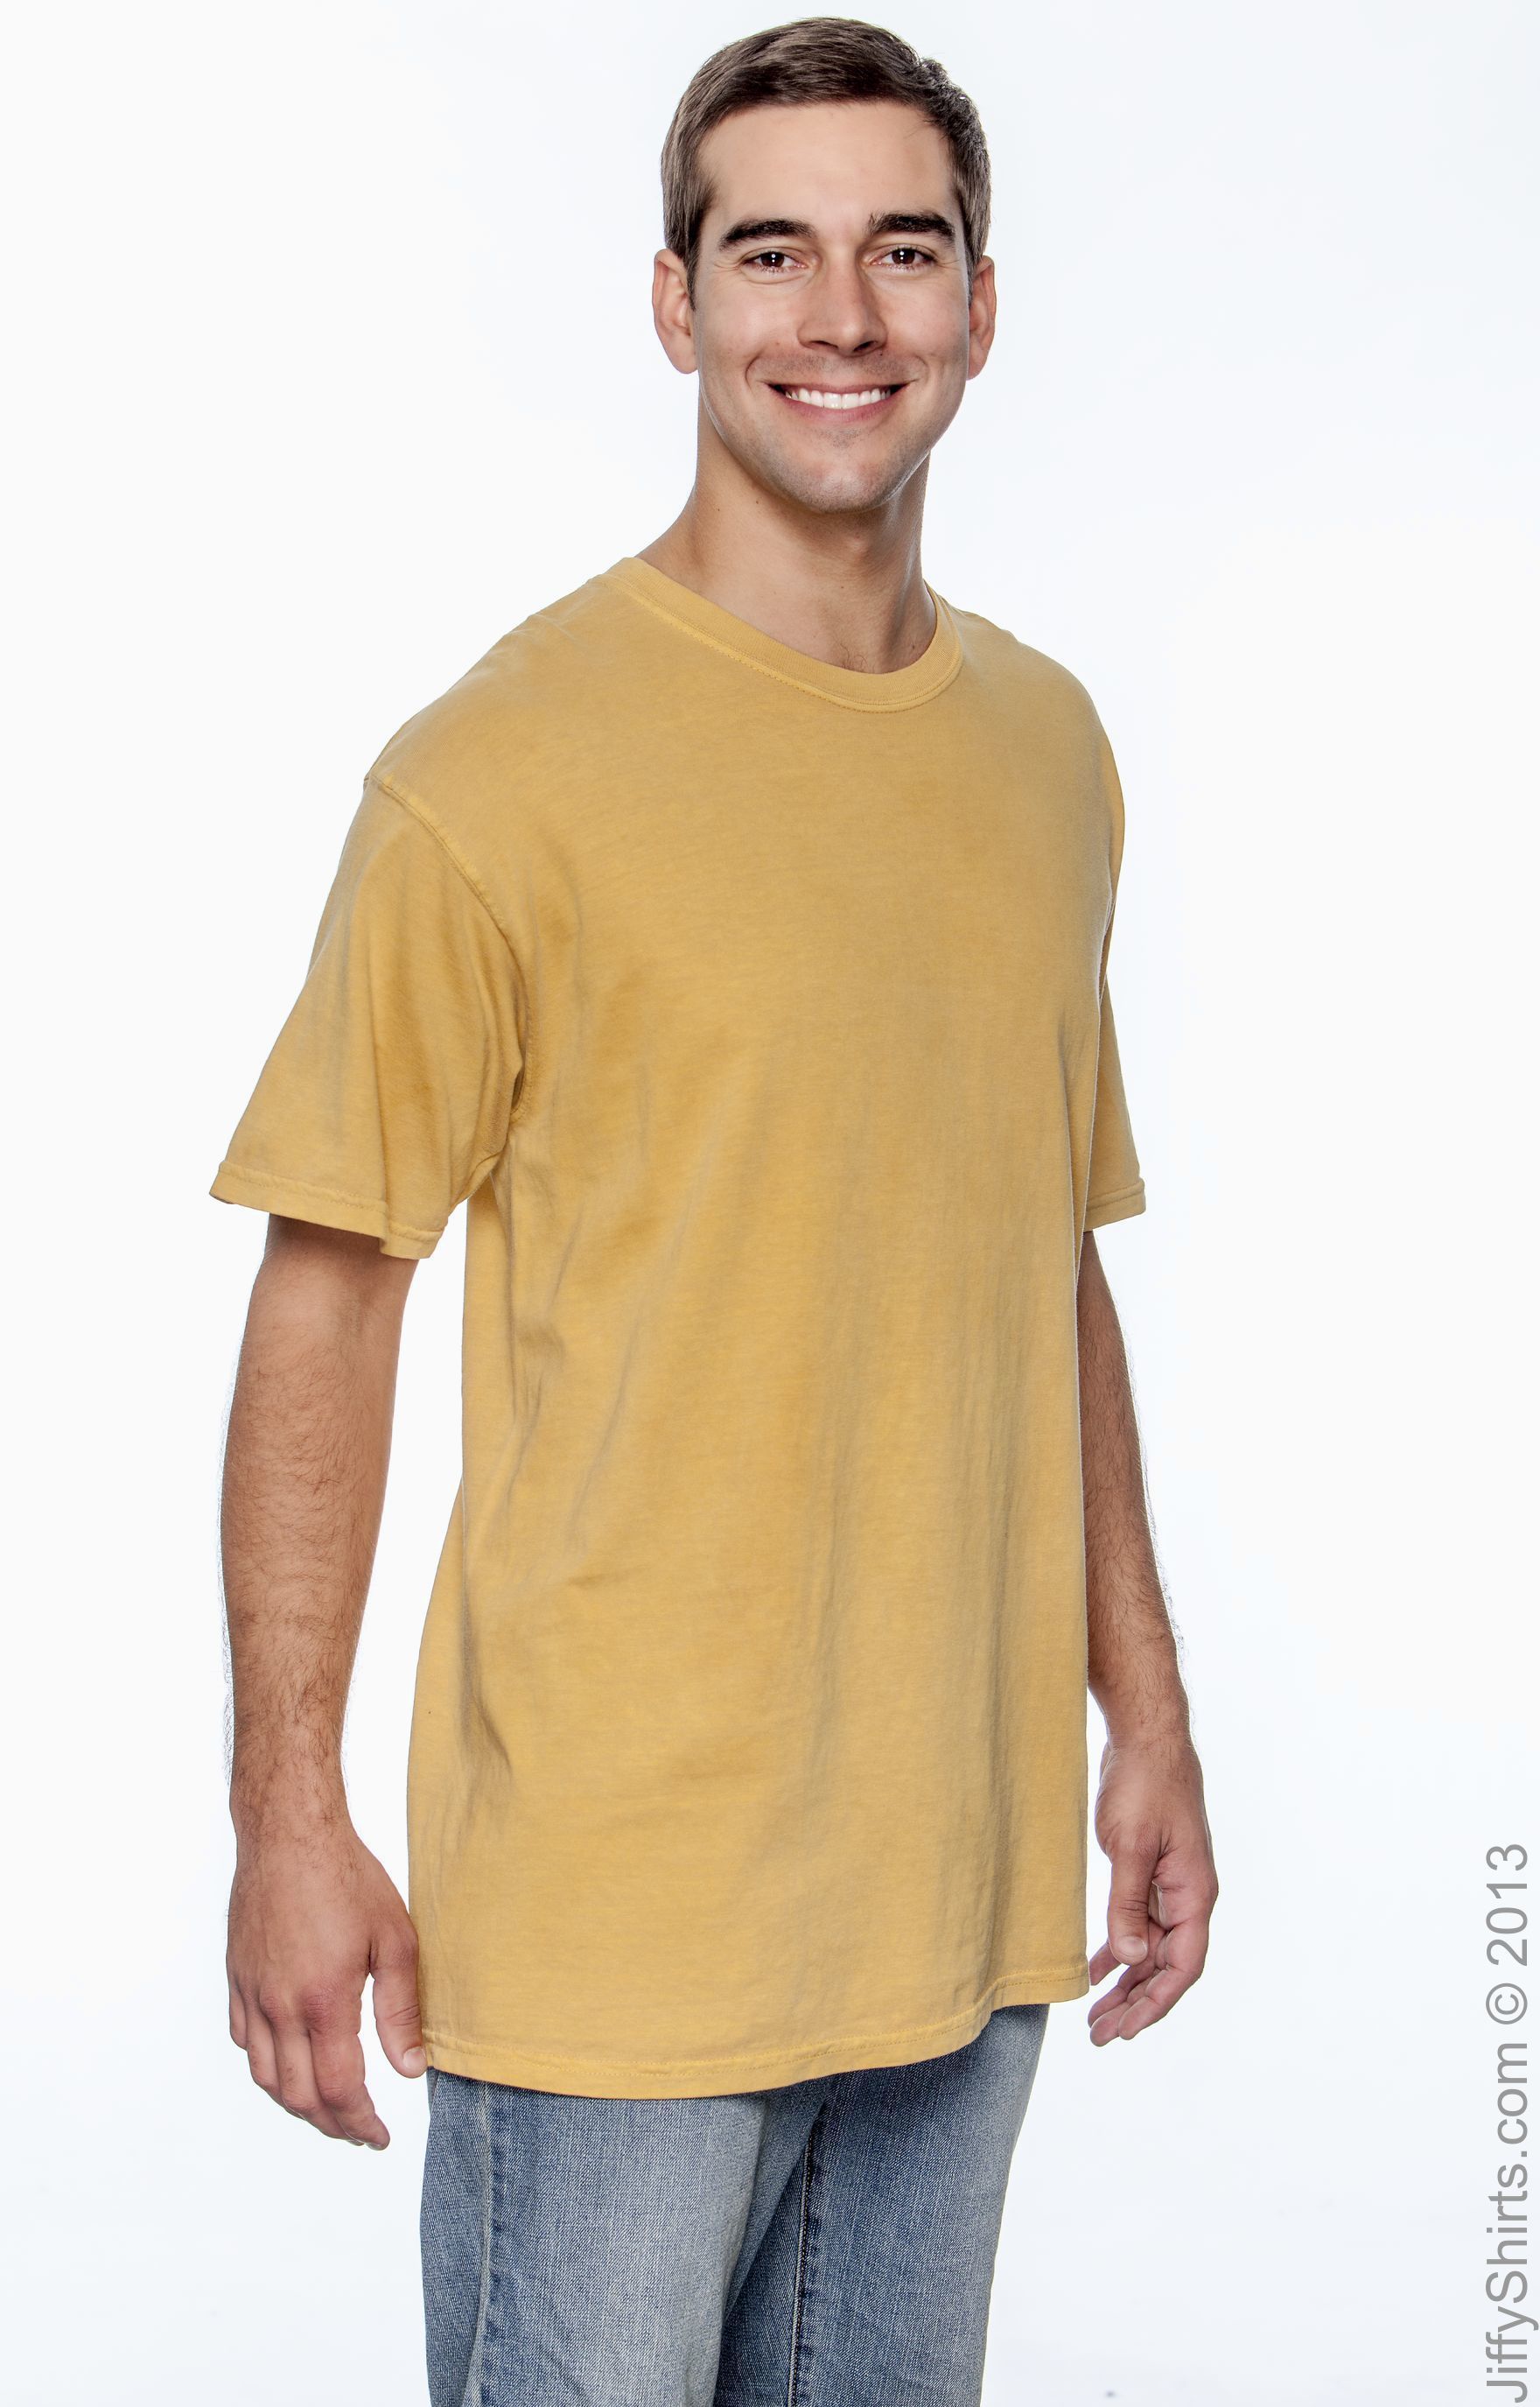 Adult RS Tshirt C1717 Hemp Comfort Colors On Rack Mock Up